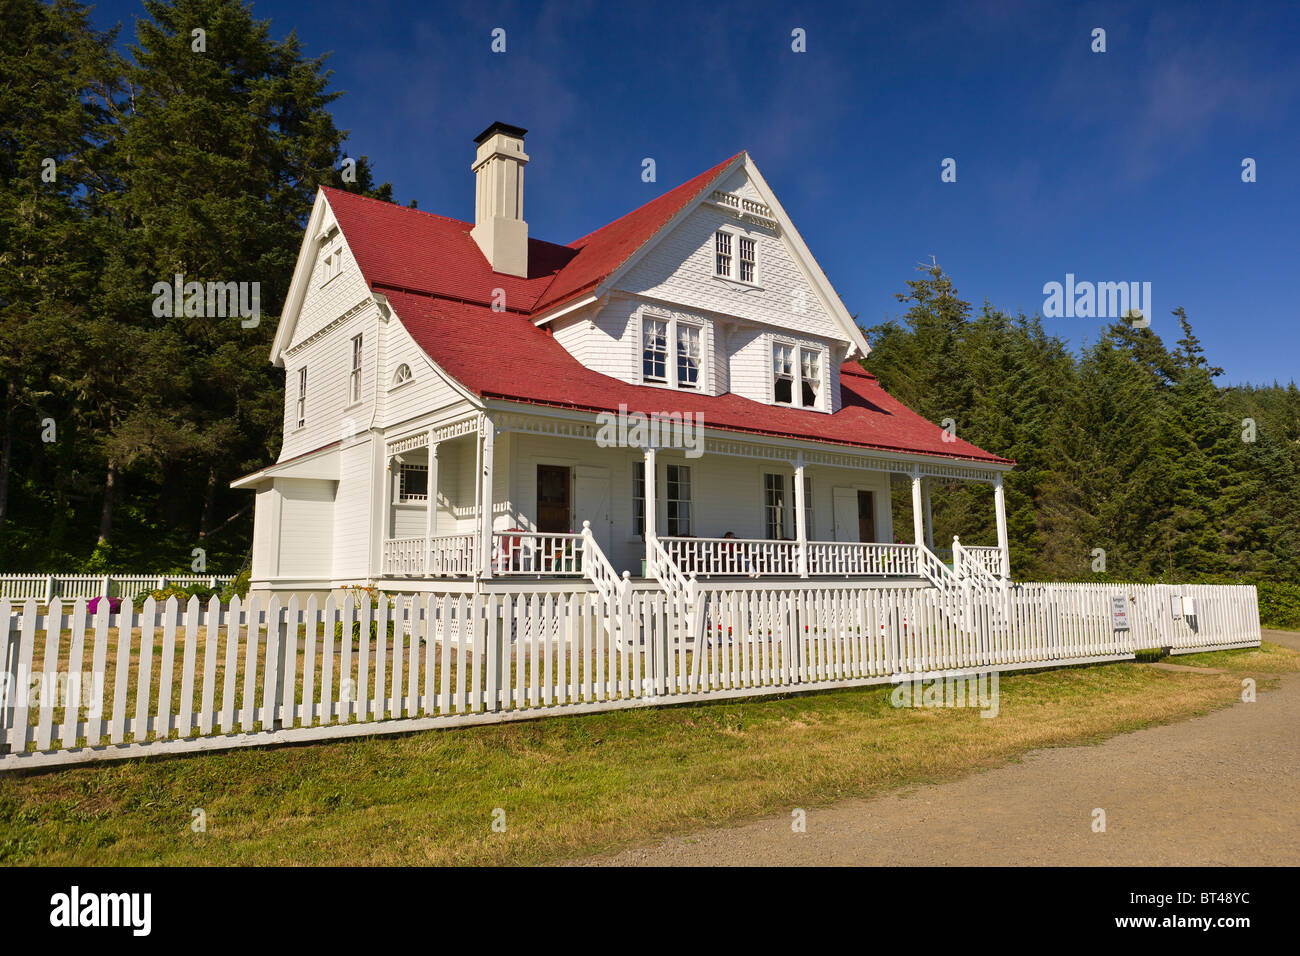 HECETA HEAD, OREGON, USA - Keeper's house at Heceta Head lighthouse on Oregon coast. Stock Photo